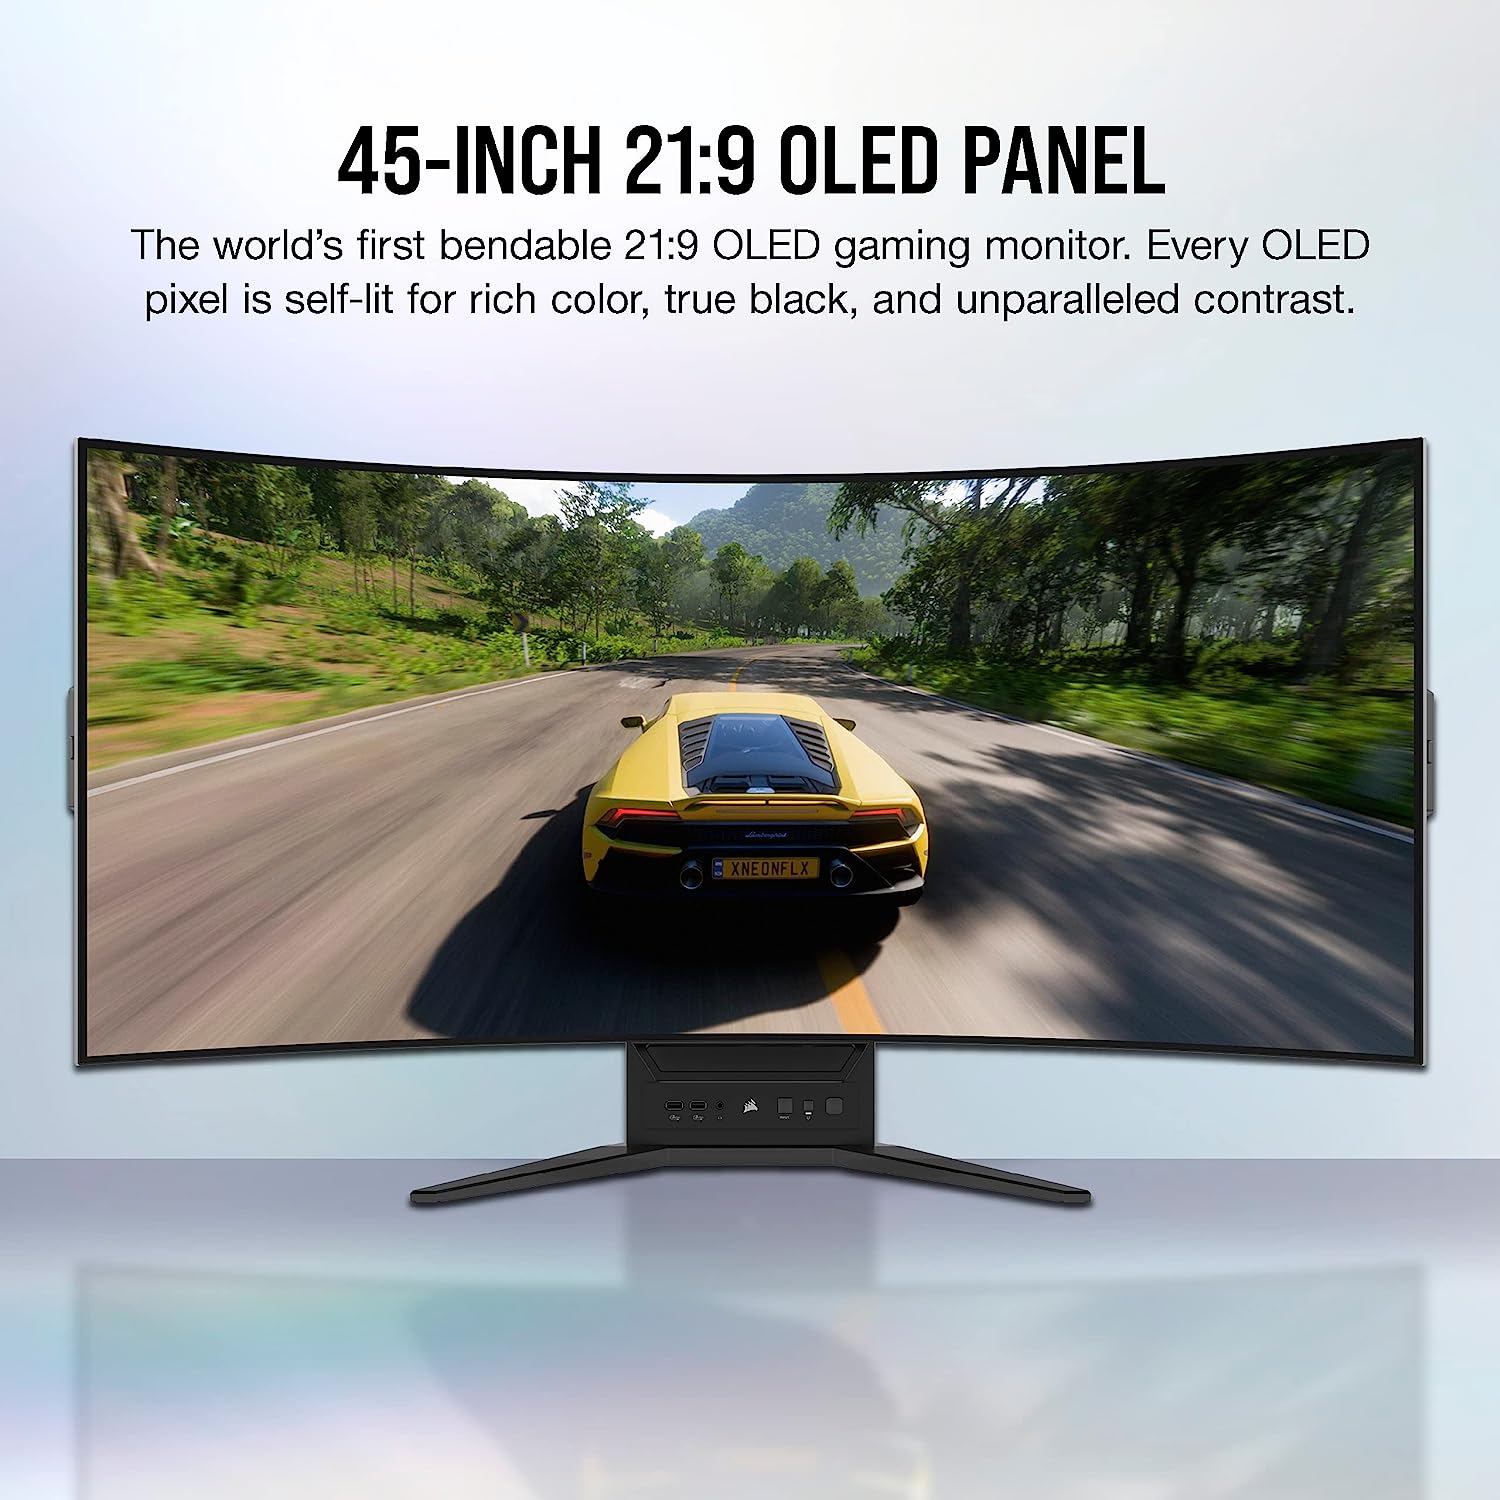 Corsair 45-Inch 240Hz OLED Gaming Monitor - 3440x1440, 0.03ms Response, G-SYNC - $1200